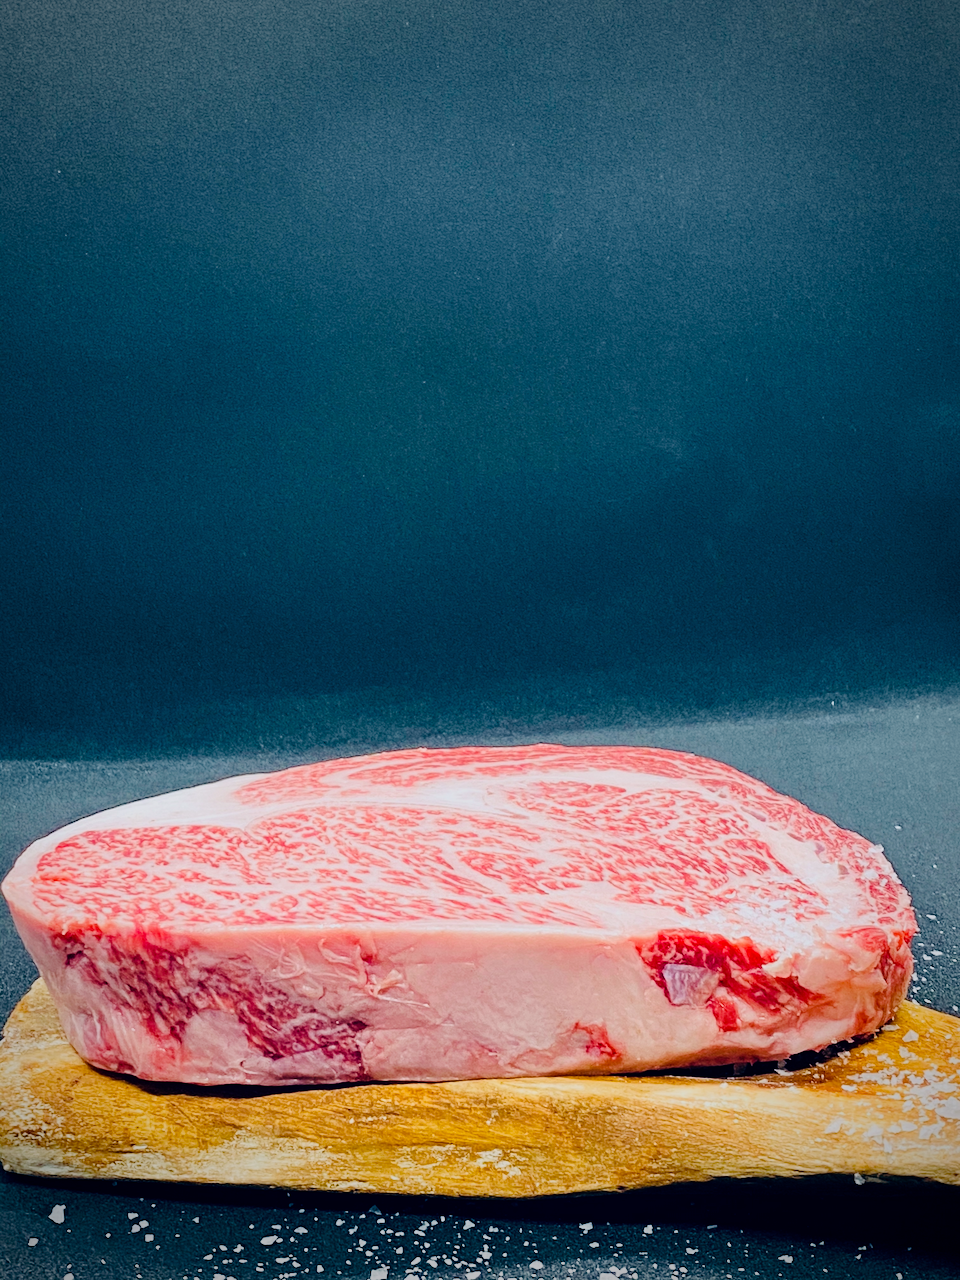 Japanese A5 Wagyu Kagoshima Ribeye Steak Os Meatshop 